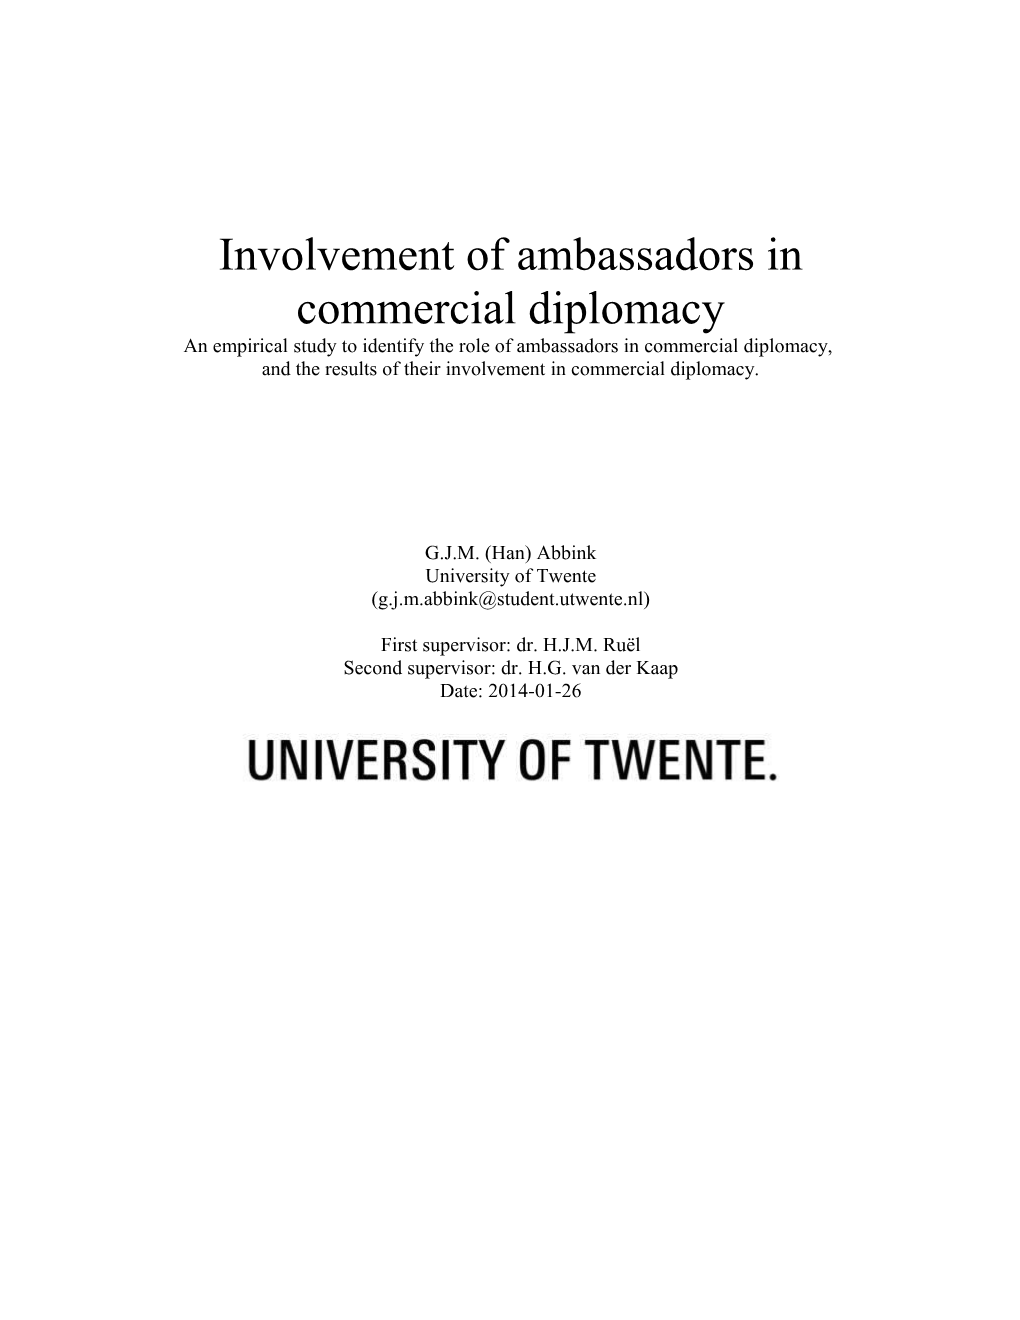 G.J.M. (Han) Abbink University of Twente ()